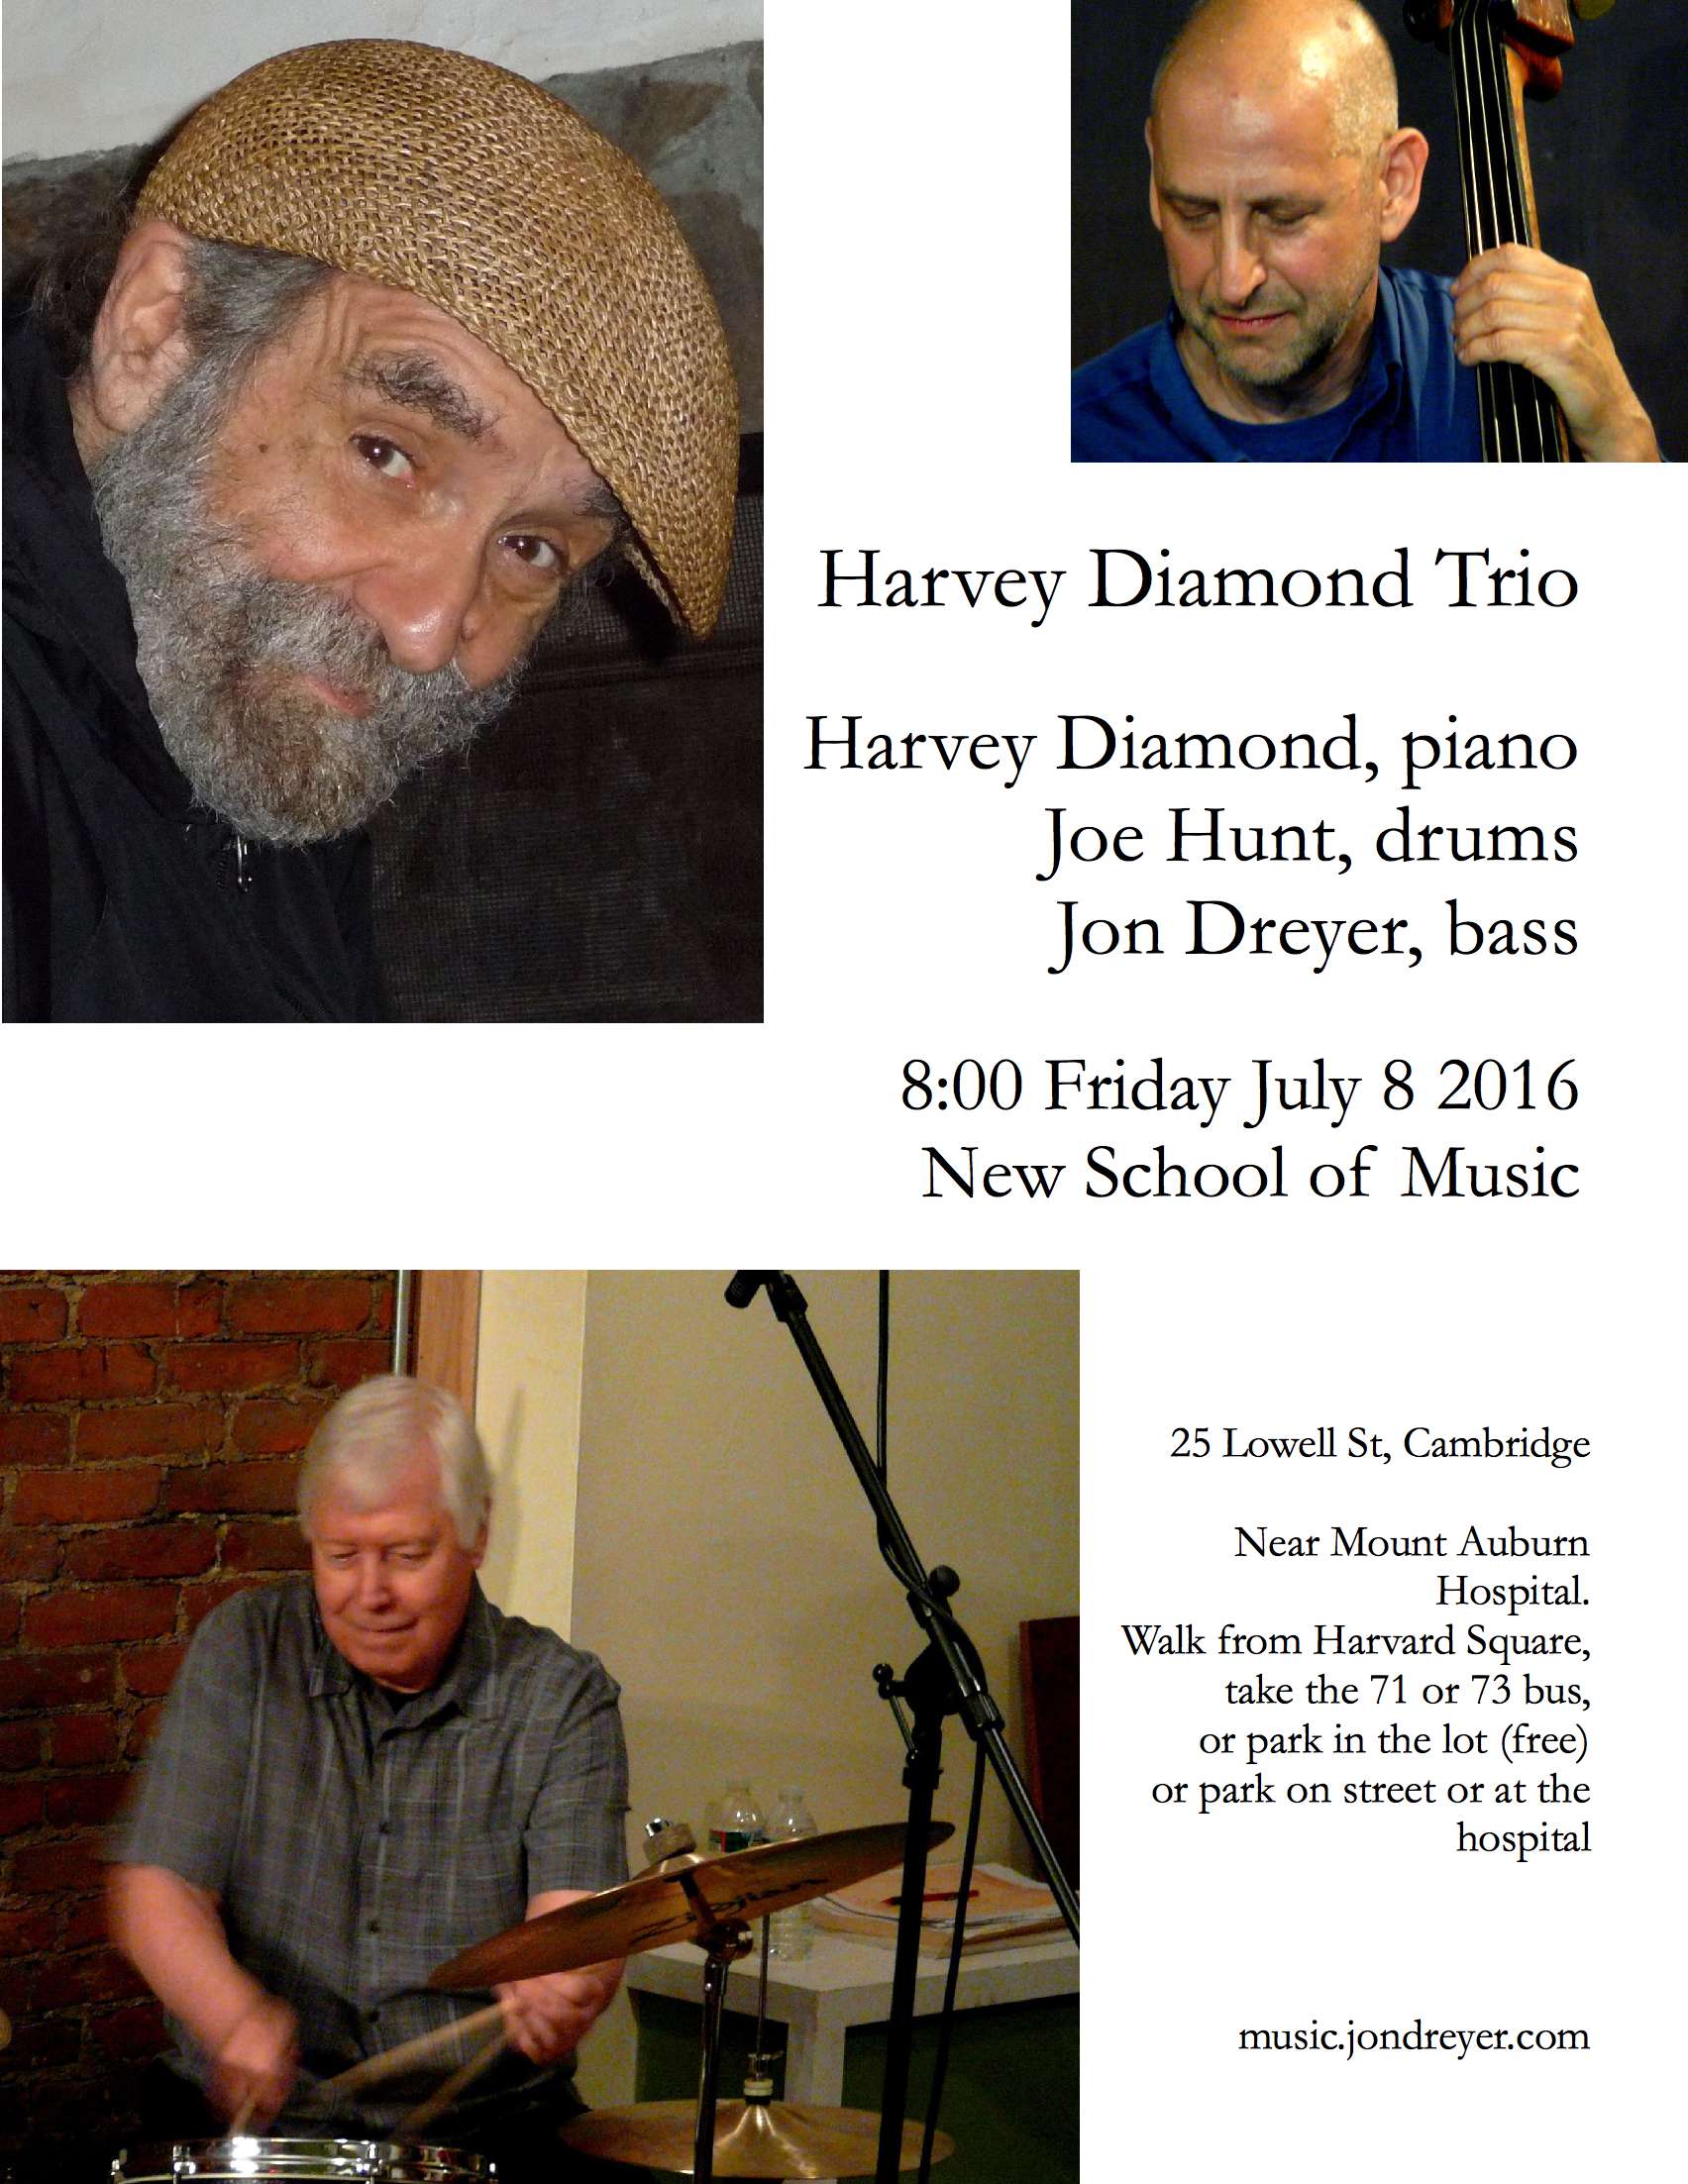 Harvey Diamond Trio Poster, July 8 2016